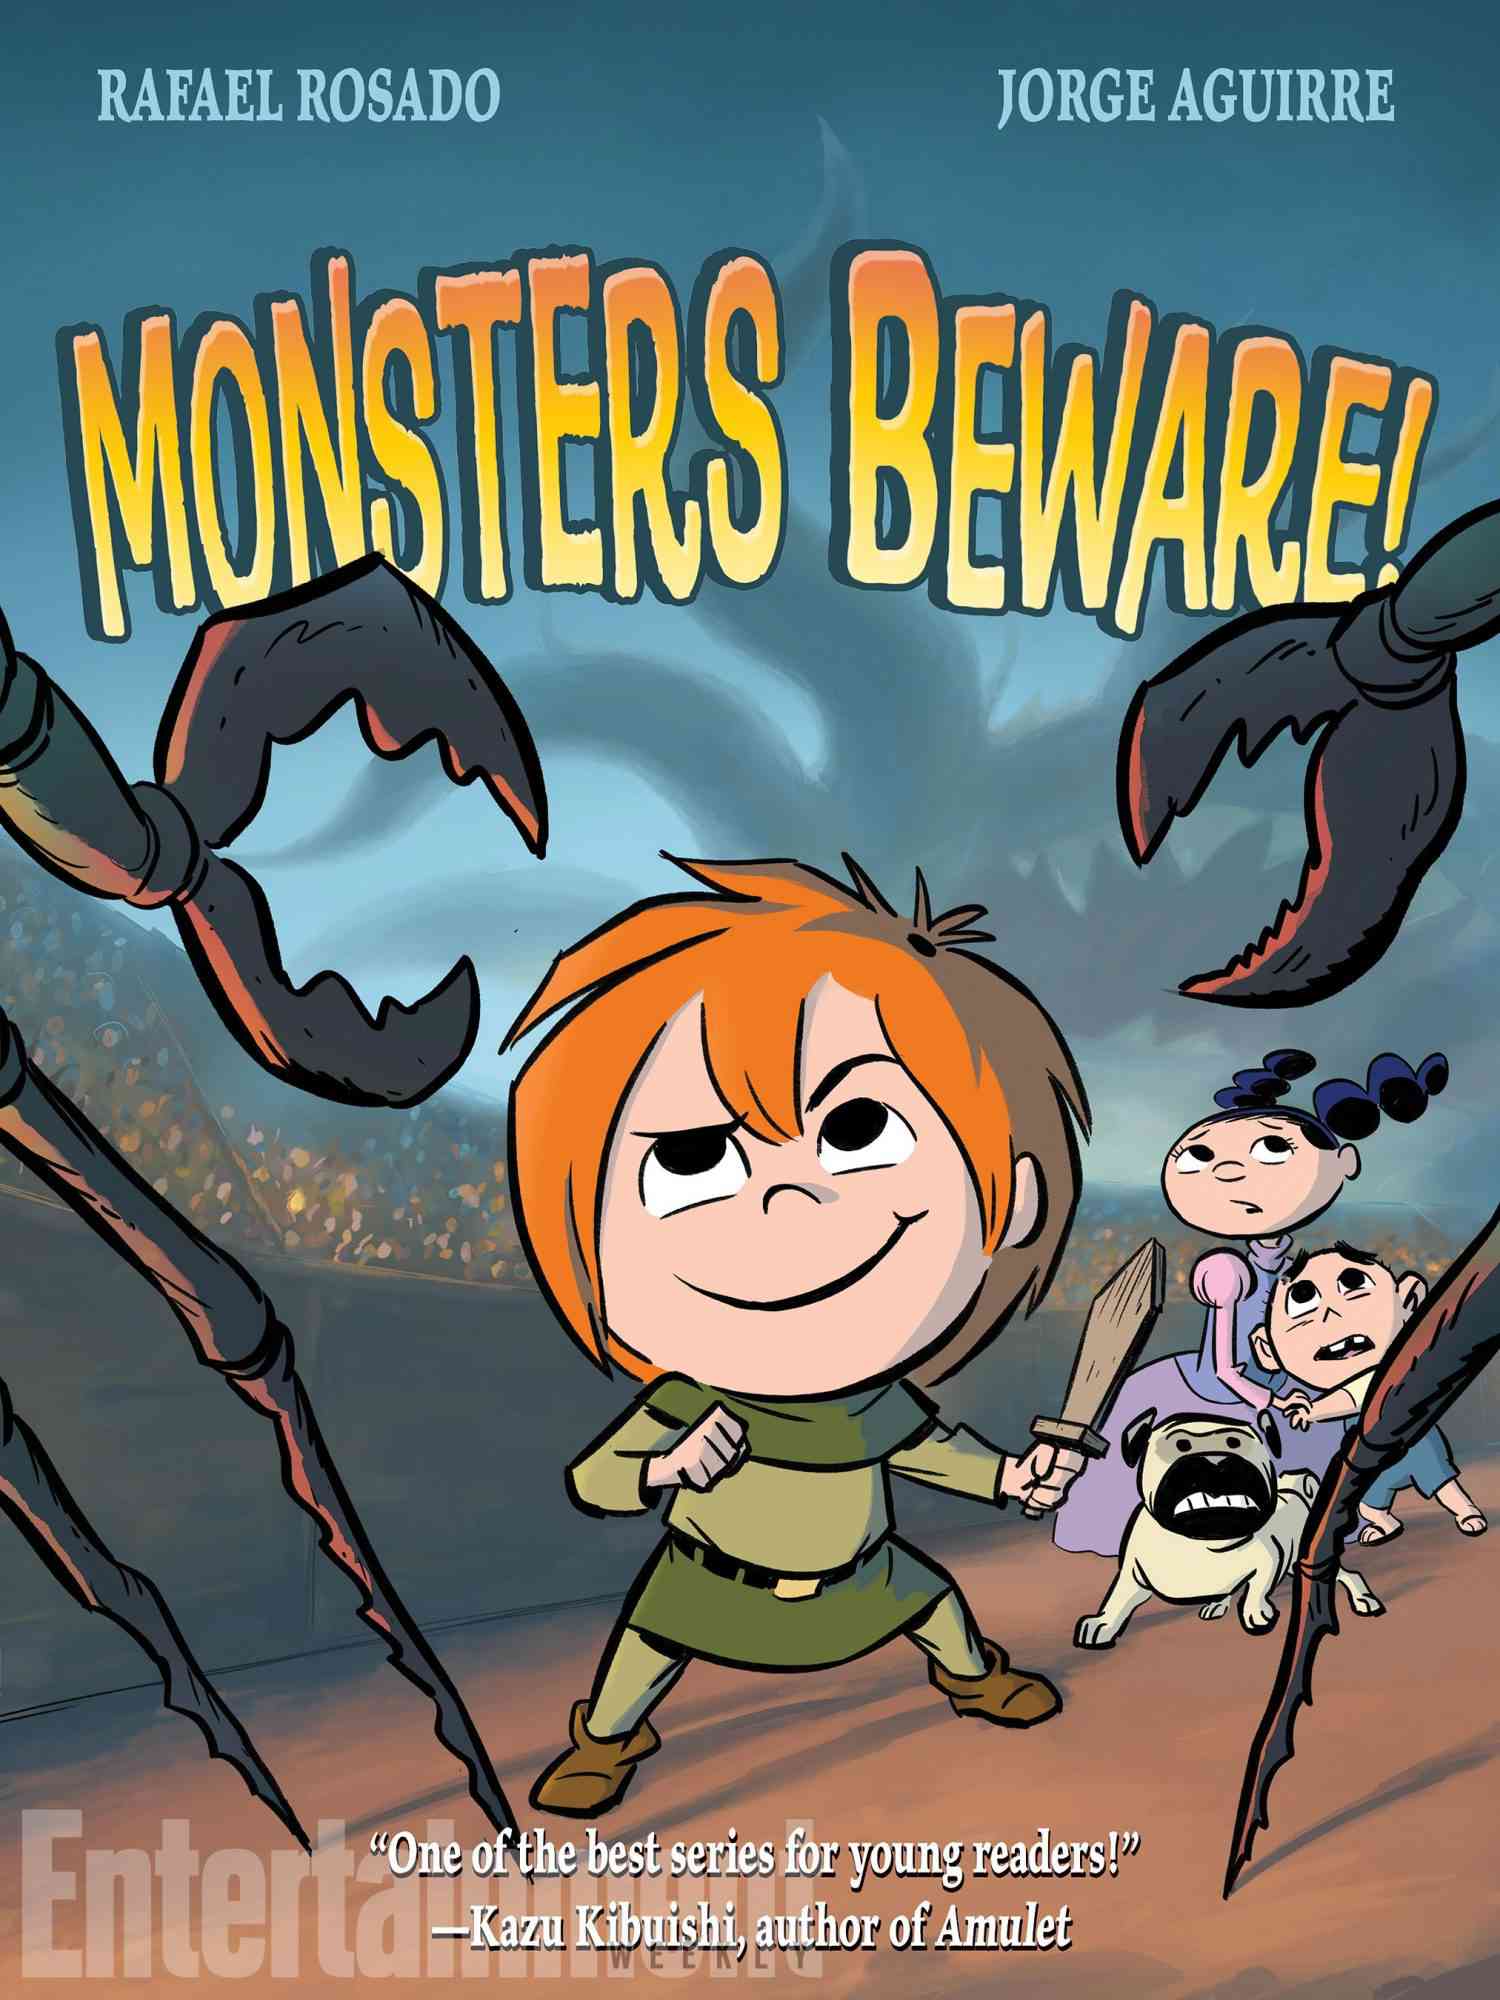 Monsters Beware! by Jorge Aguirre and Rafael Rosado